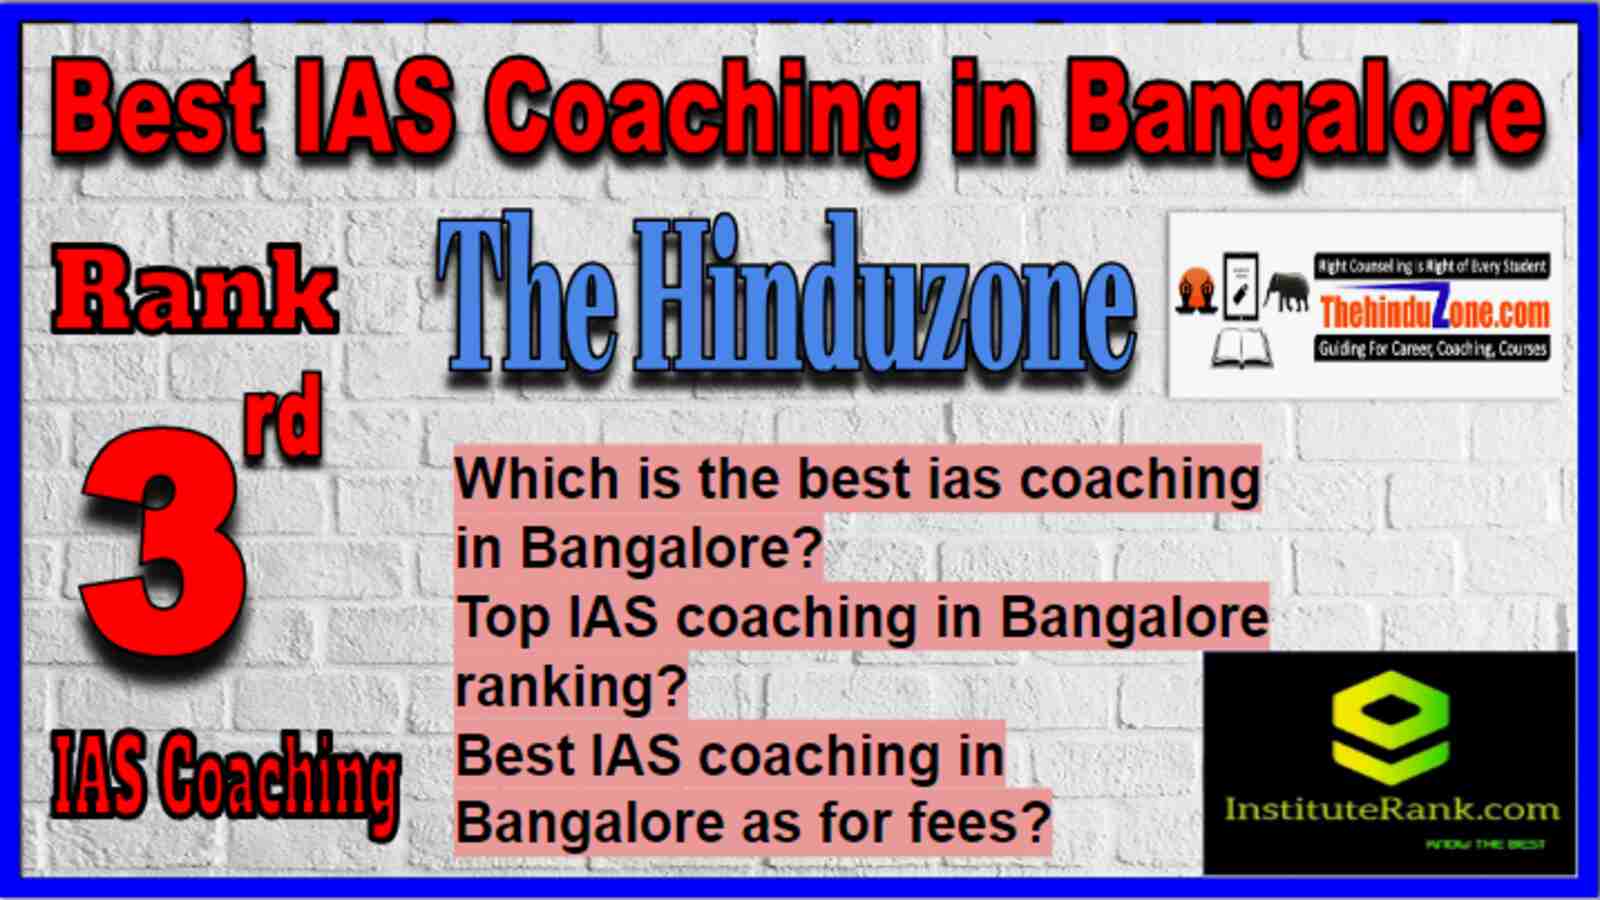 Rank 3 Best IAS Coachings in Bangalore